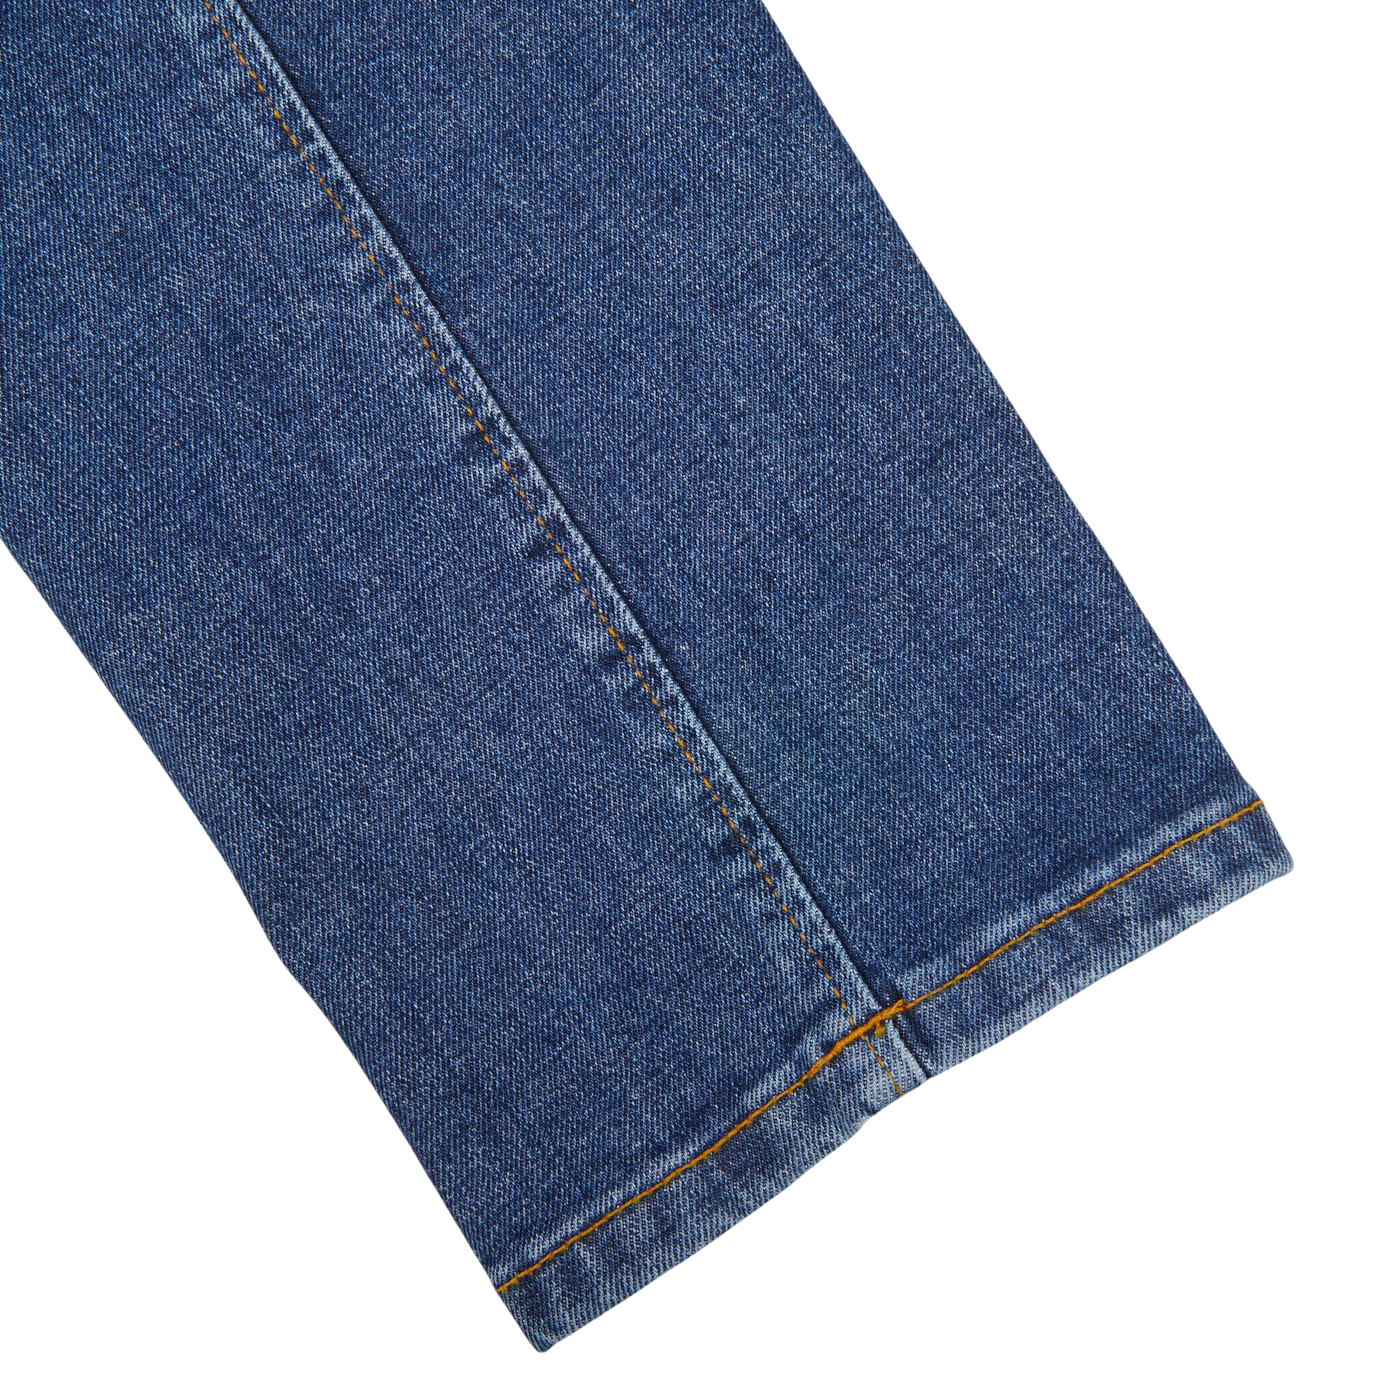 Jeanerica Blue Vintage 95 Cotton SM001 Jeans Cuff